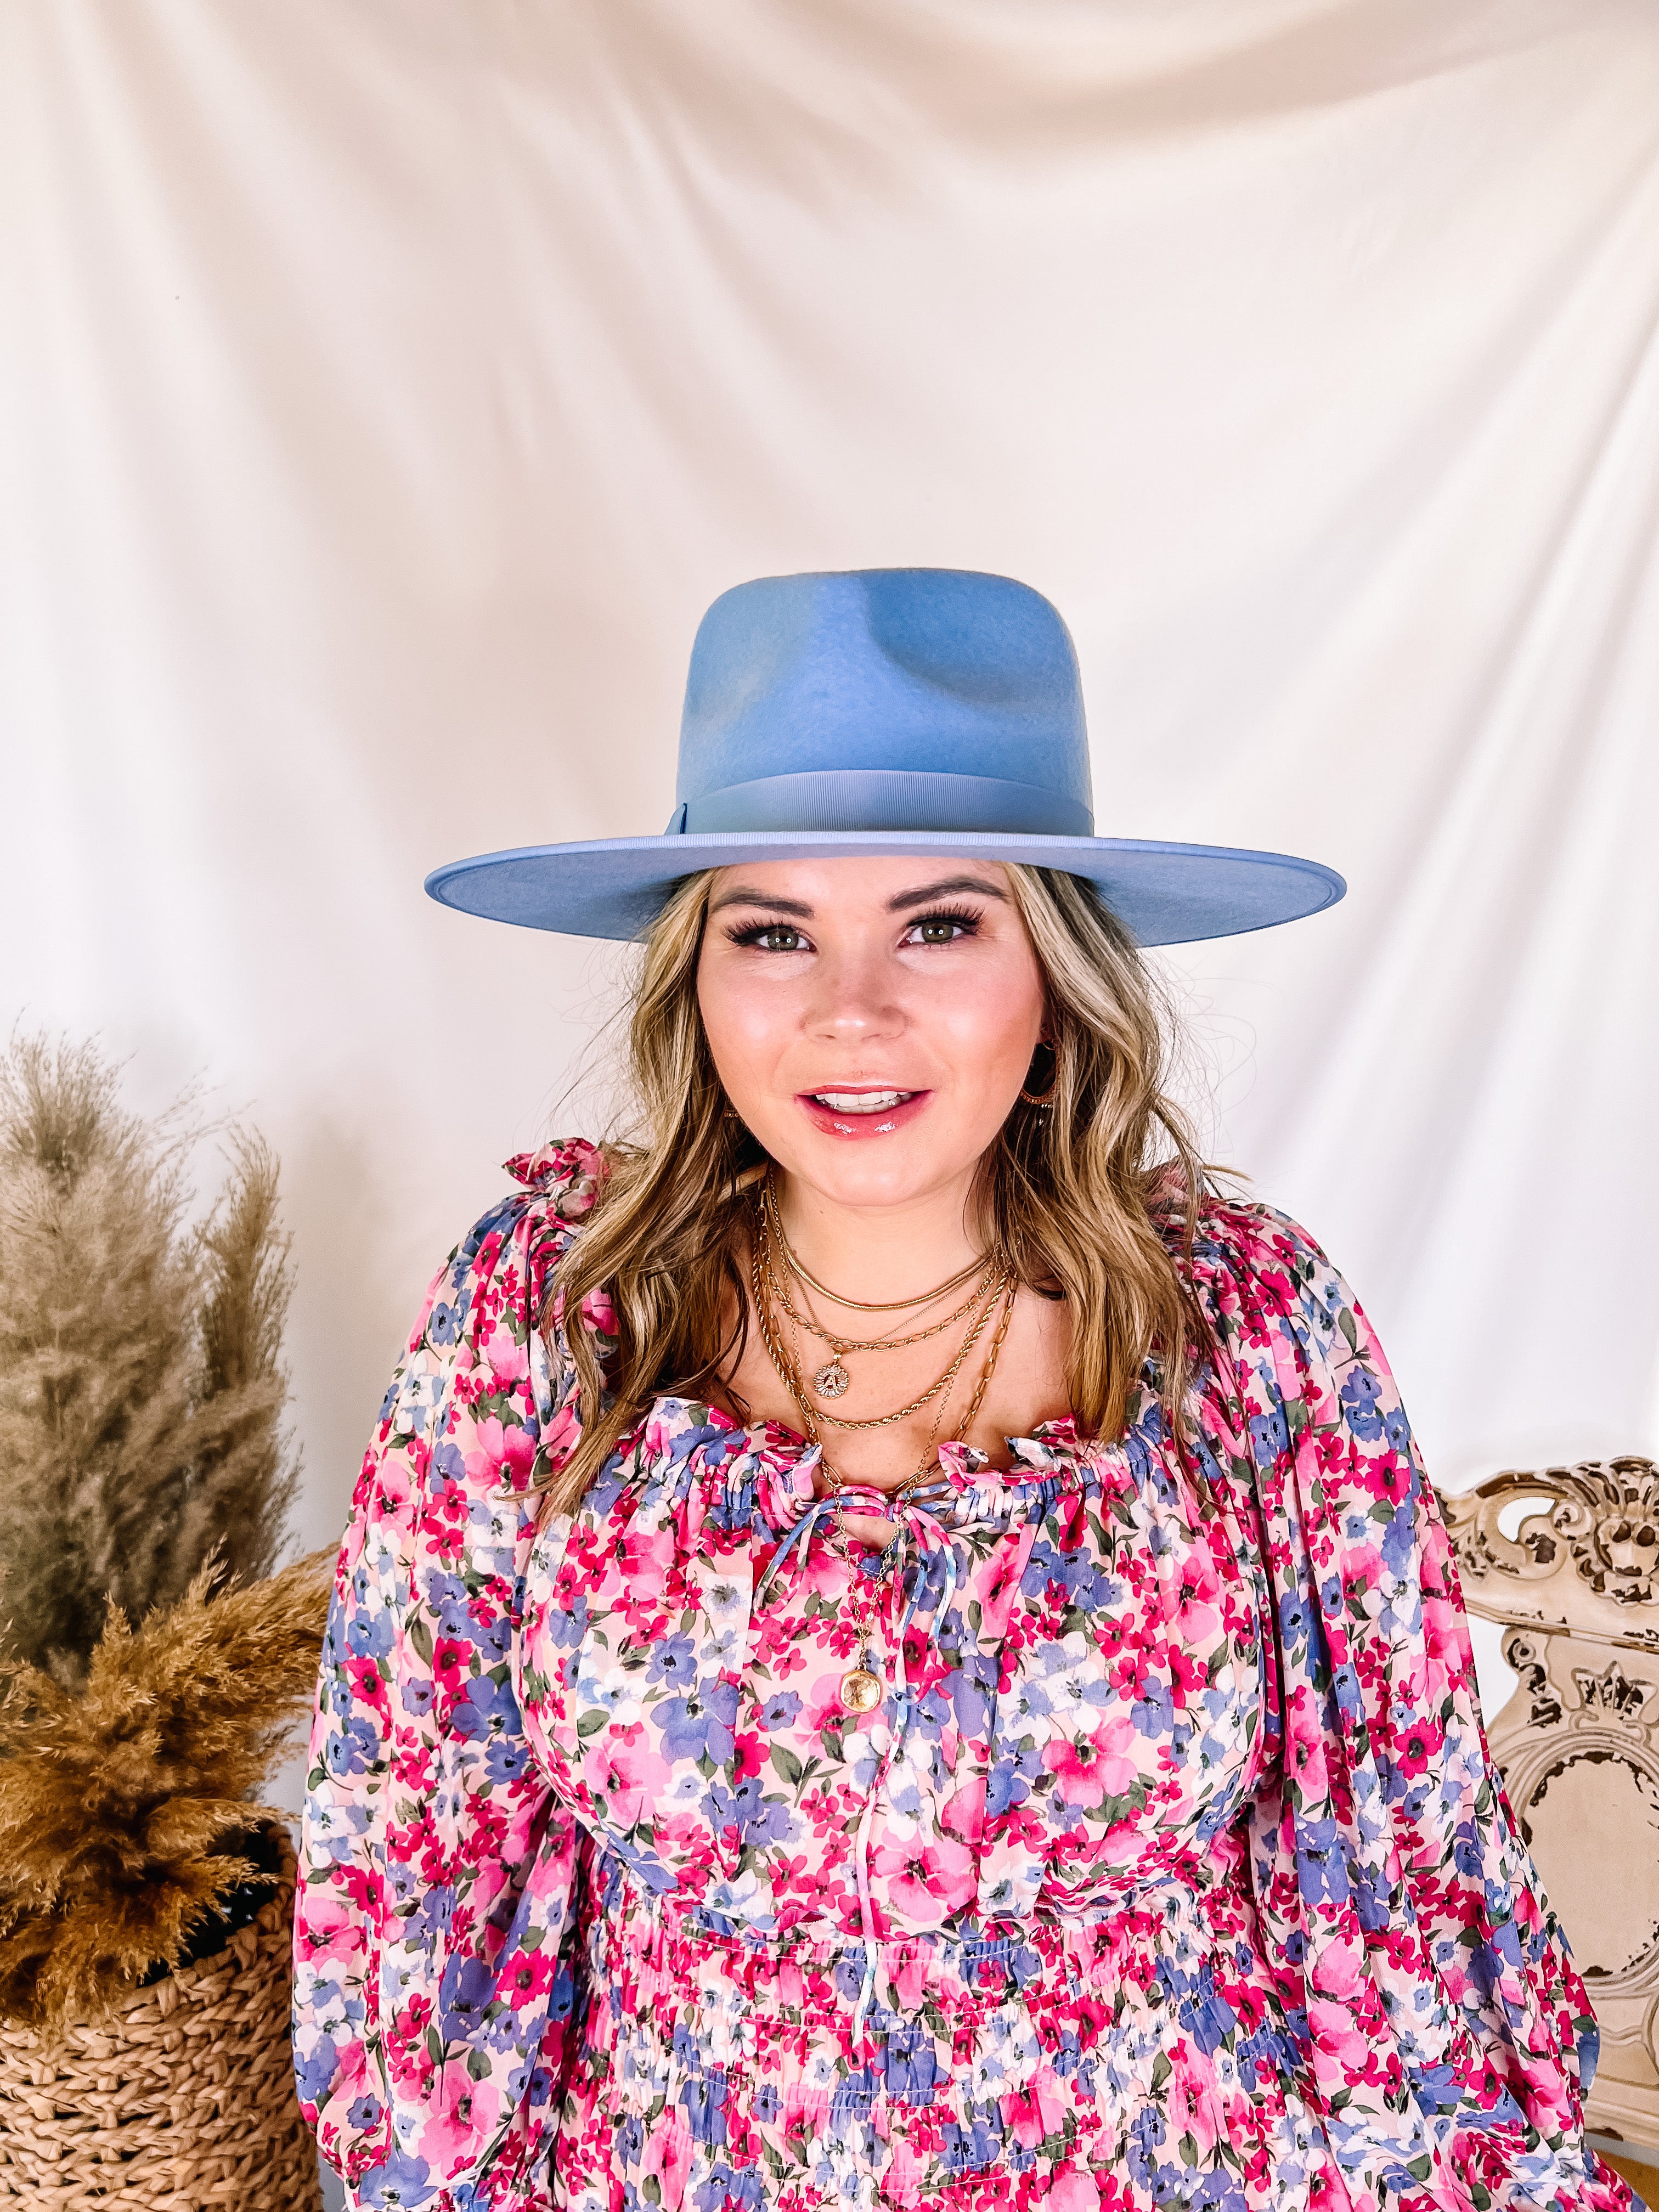 Lack of Color | Capri Rancher Wool Felt Hat in Sky Blue - Giddy Up Glamour Boutique